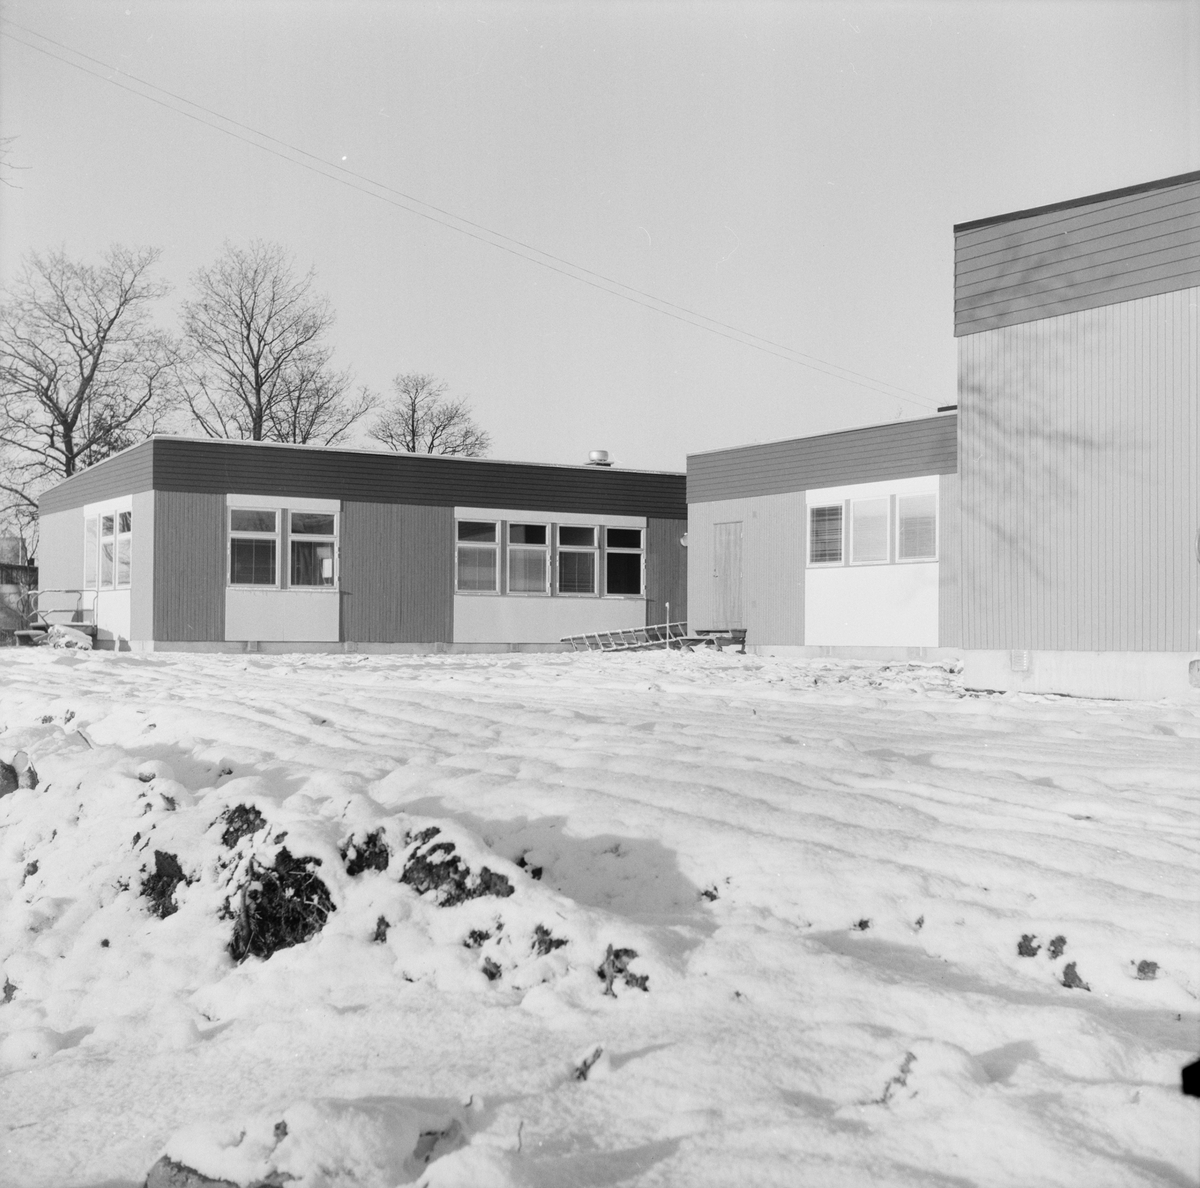 Barndaghem i Tierp, Uppland 1971